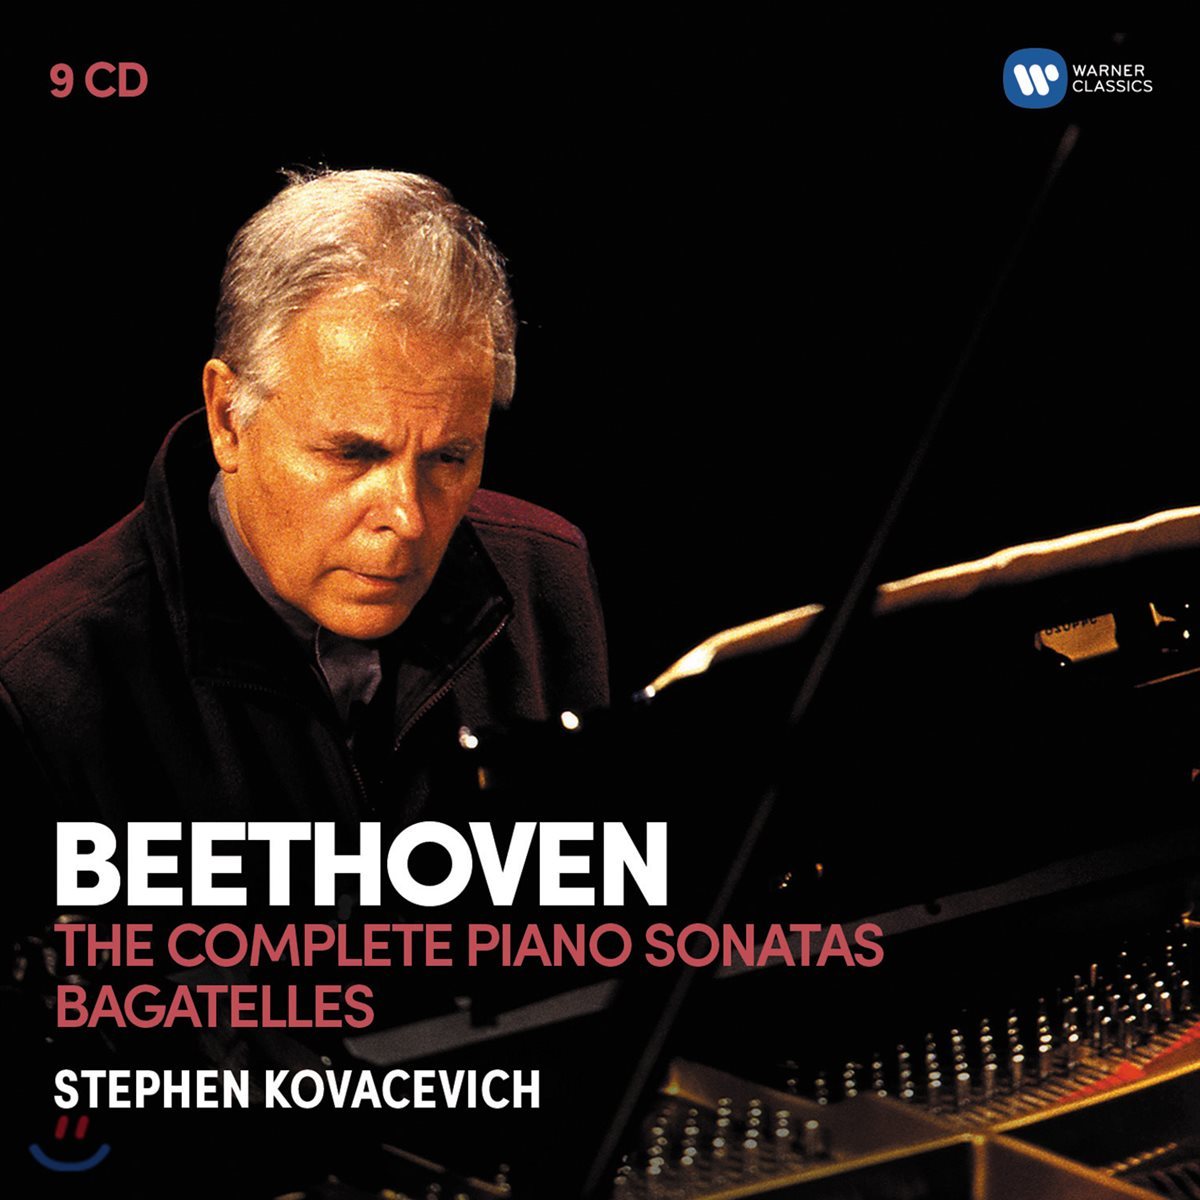 Stephen Kovacevich 베토벤: 피아노 소나타 전곡, 바가텔 - 스티븐 코바체비치 (Beethoven: The Complete Piano Sonatas, Bagatelles)